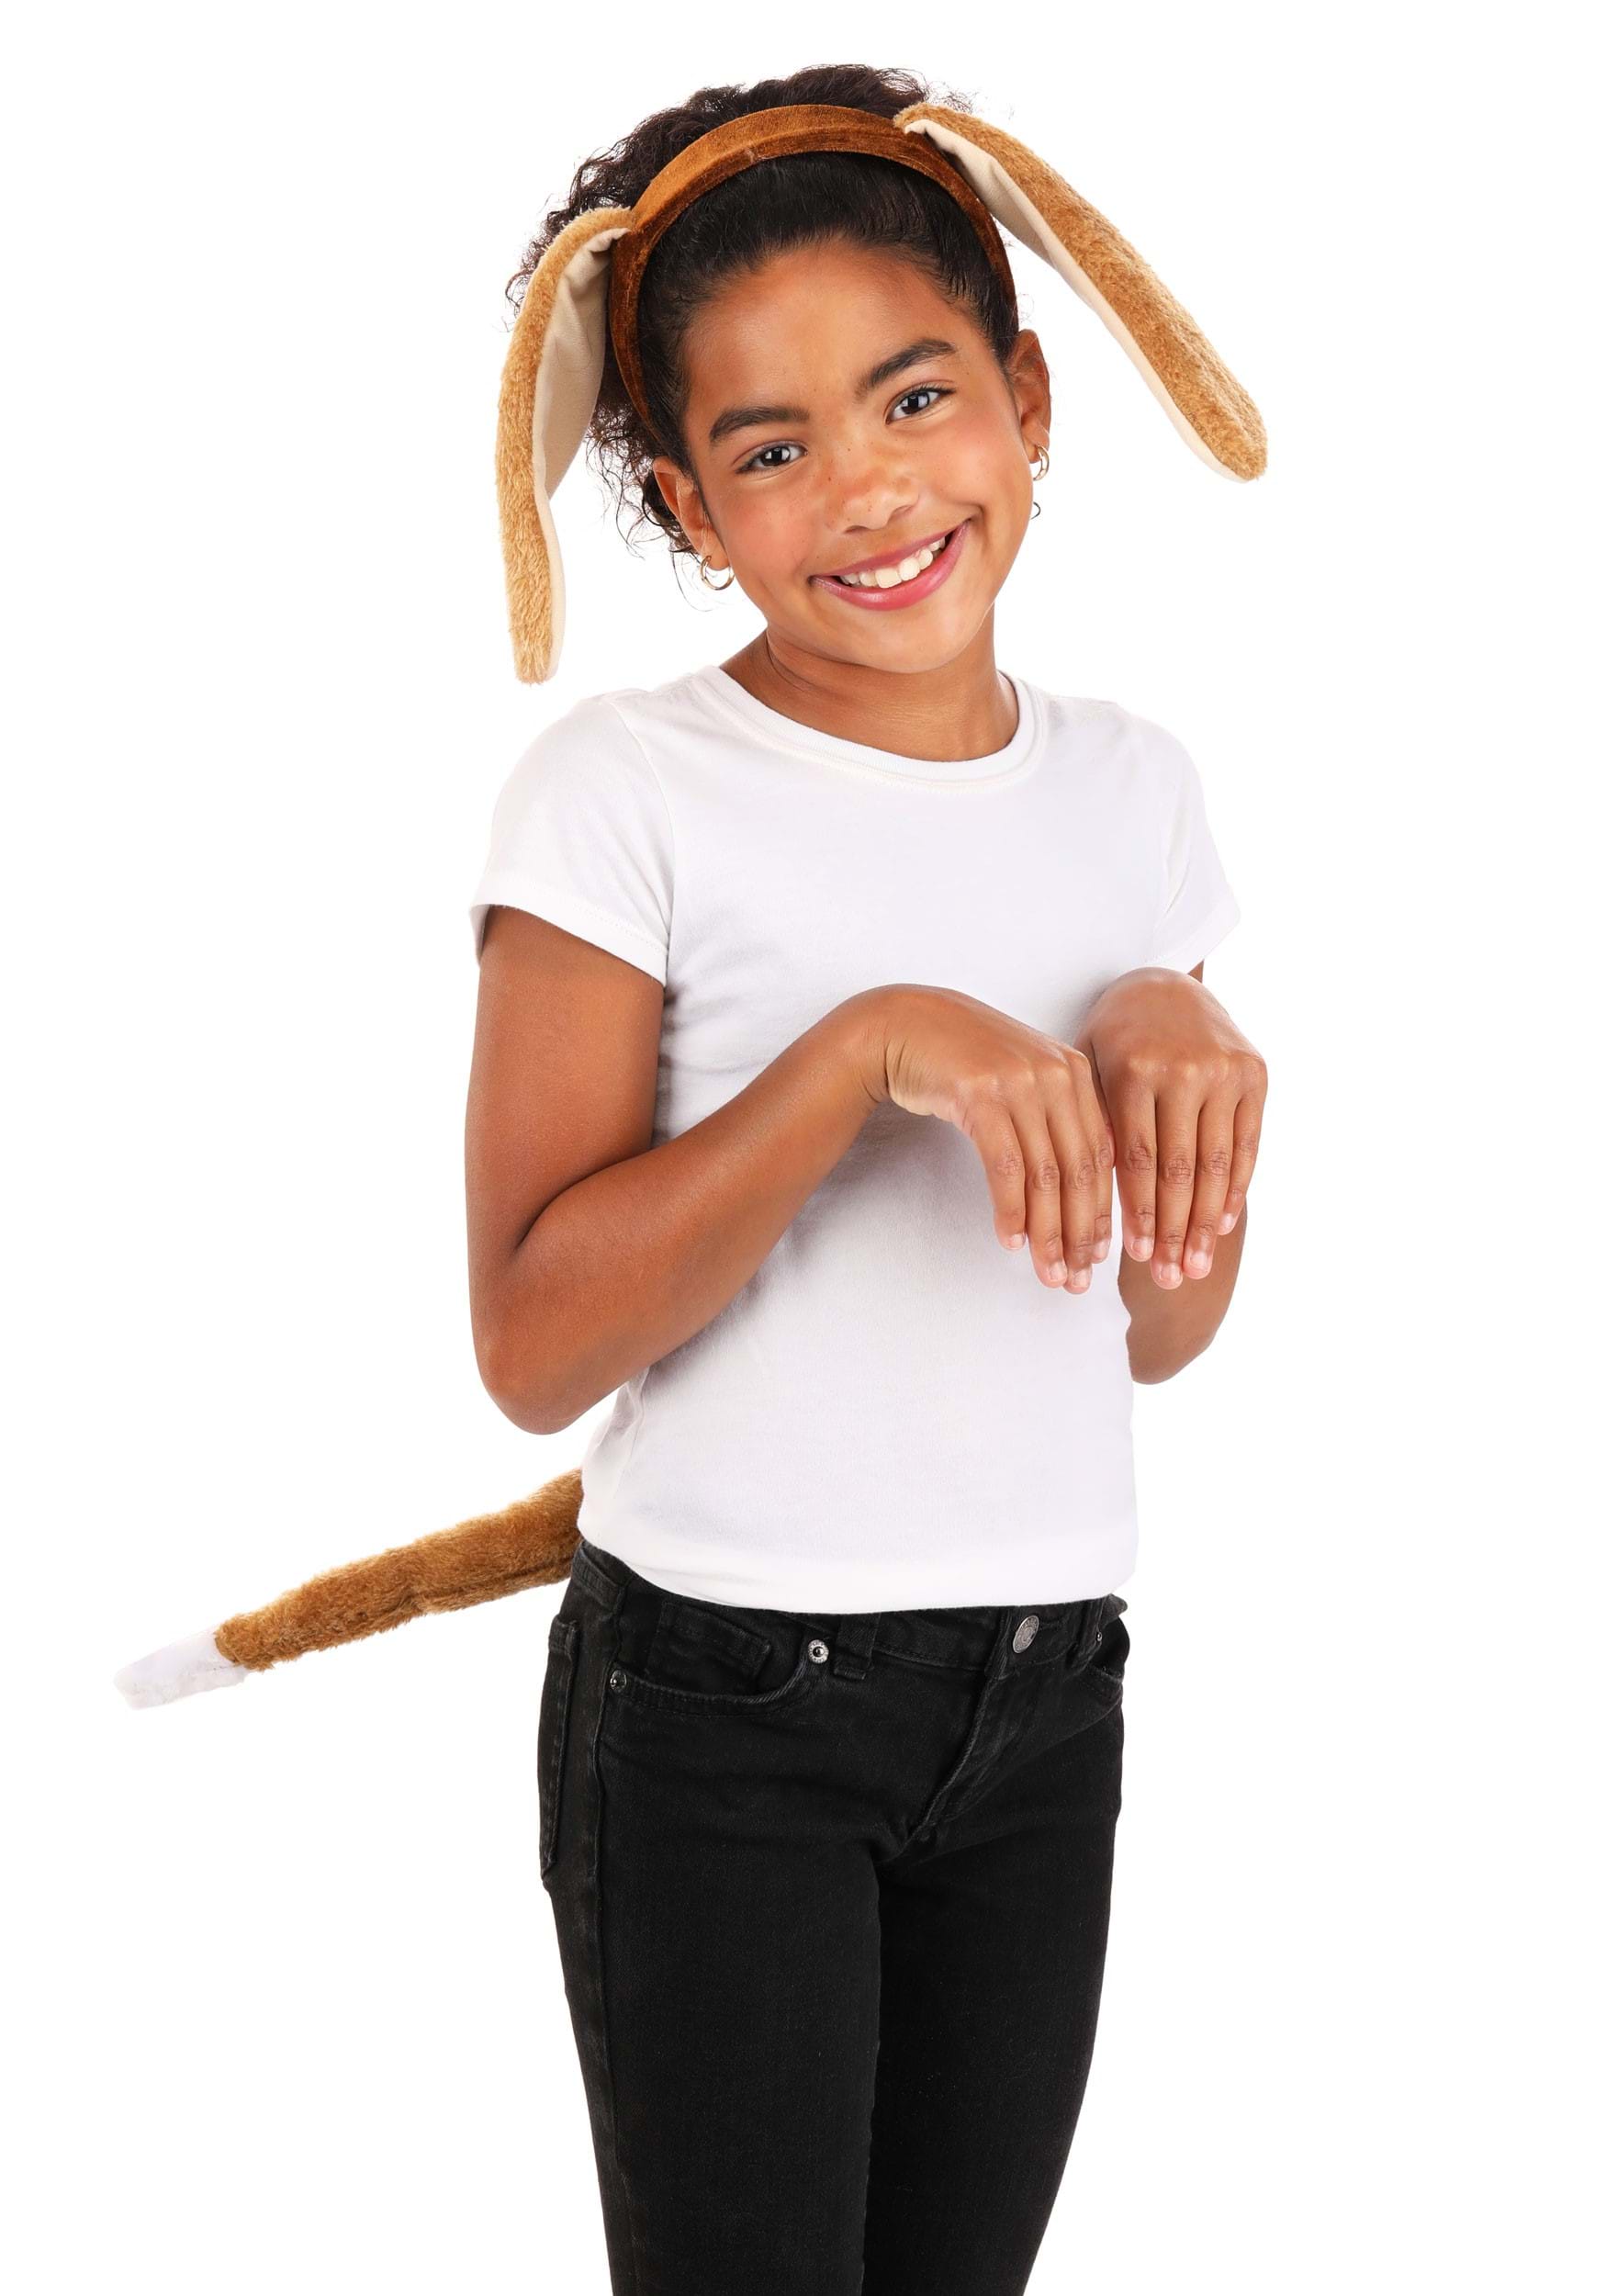 Brown Puppy Dog Ears Headband Posable Tail Canine Animal Halloween Accessory